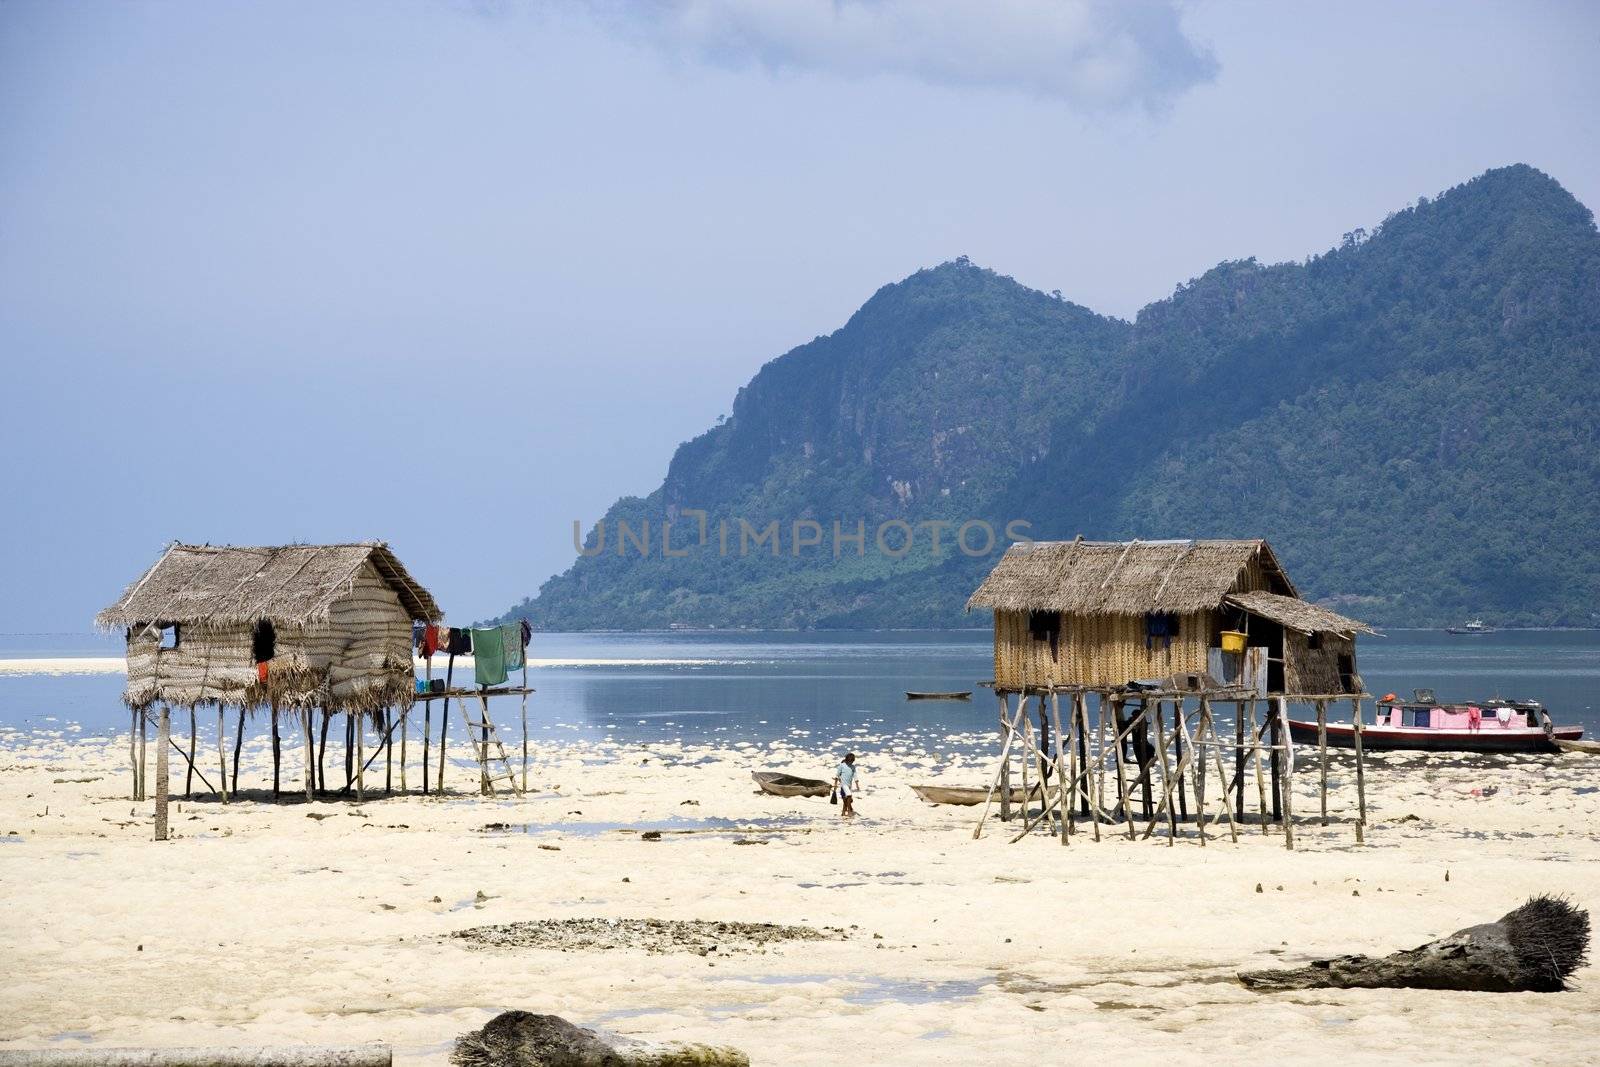 Island Native Huts on Stilts by shariffc